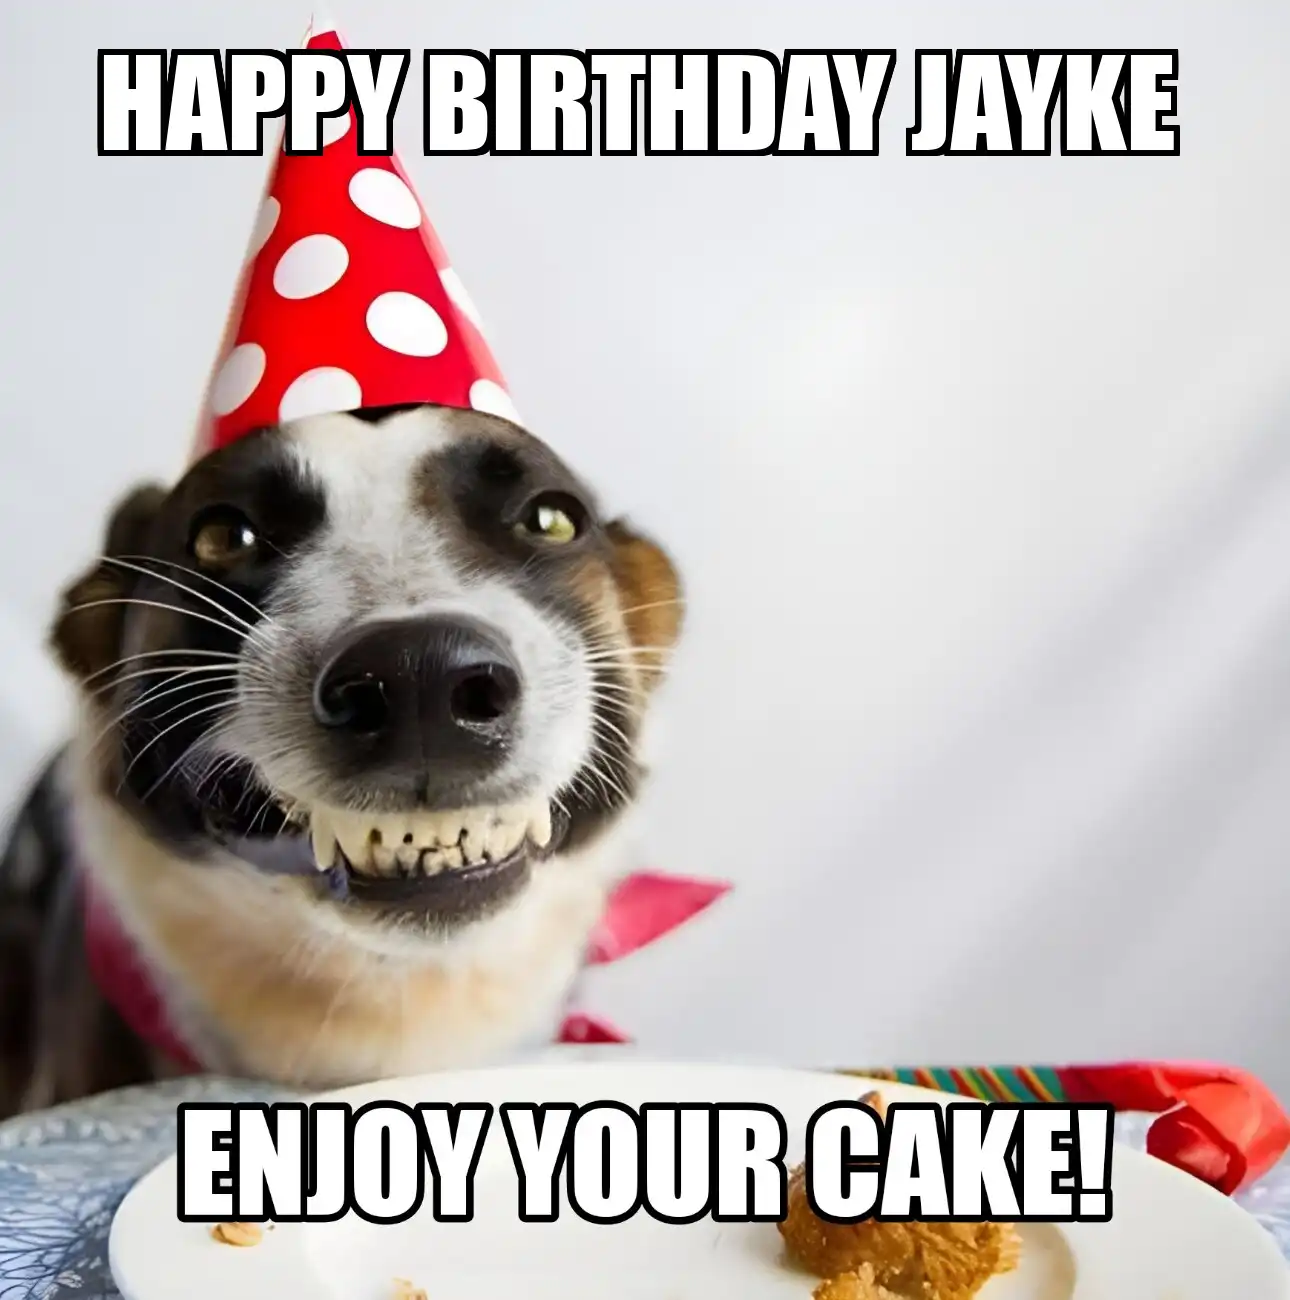 Happy Birthday Jayke Enjoy Your Cake Dog Meme